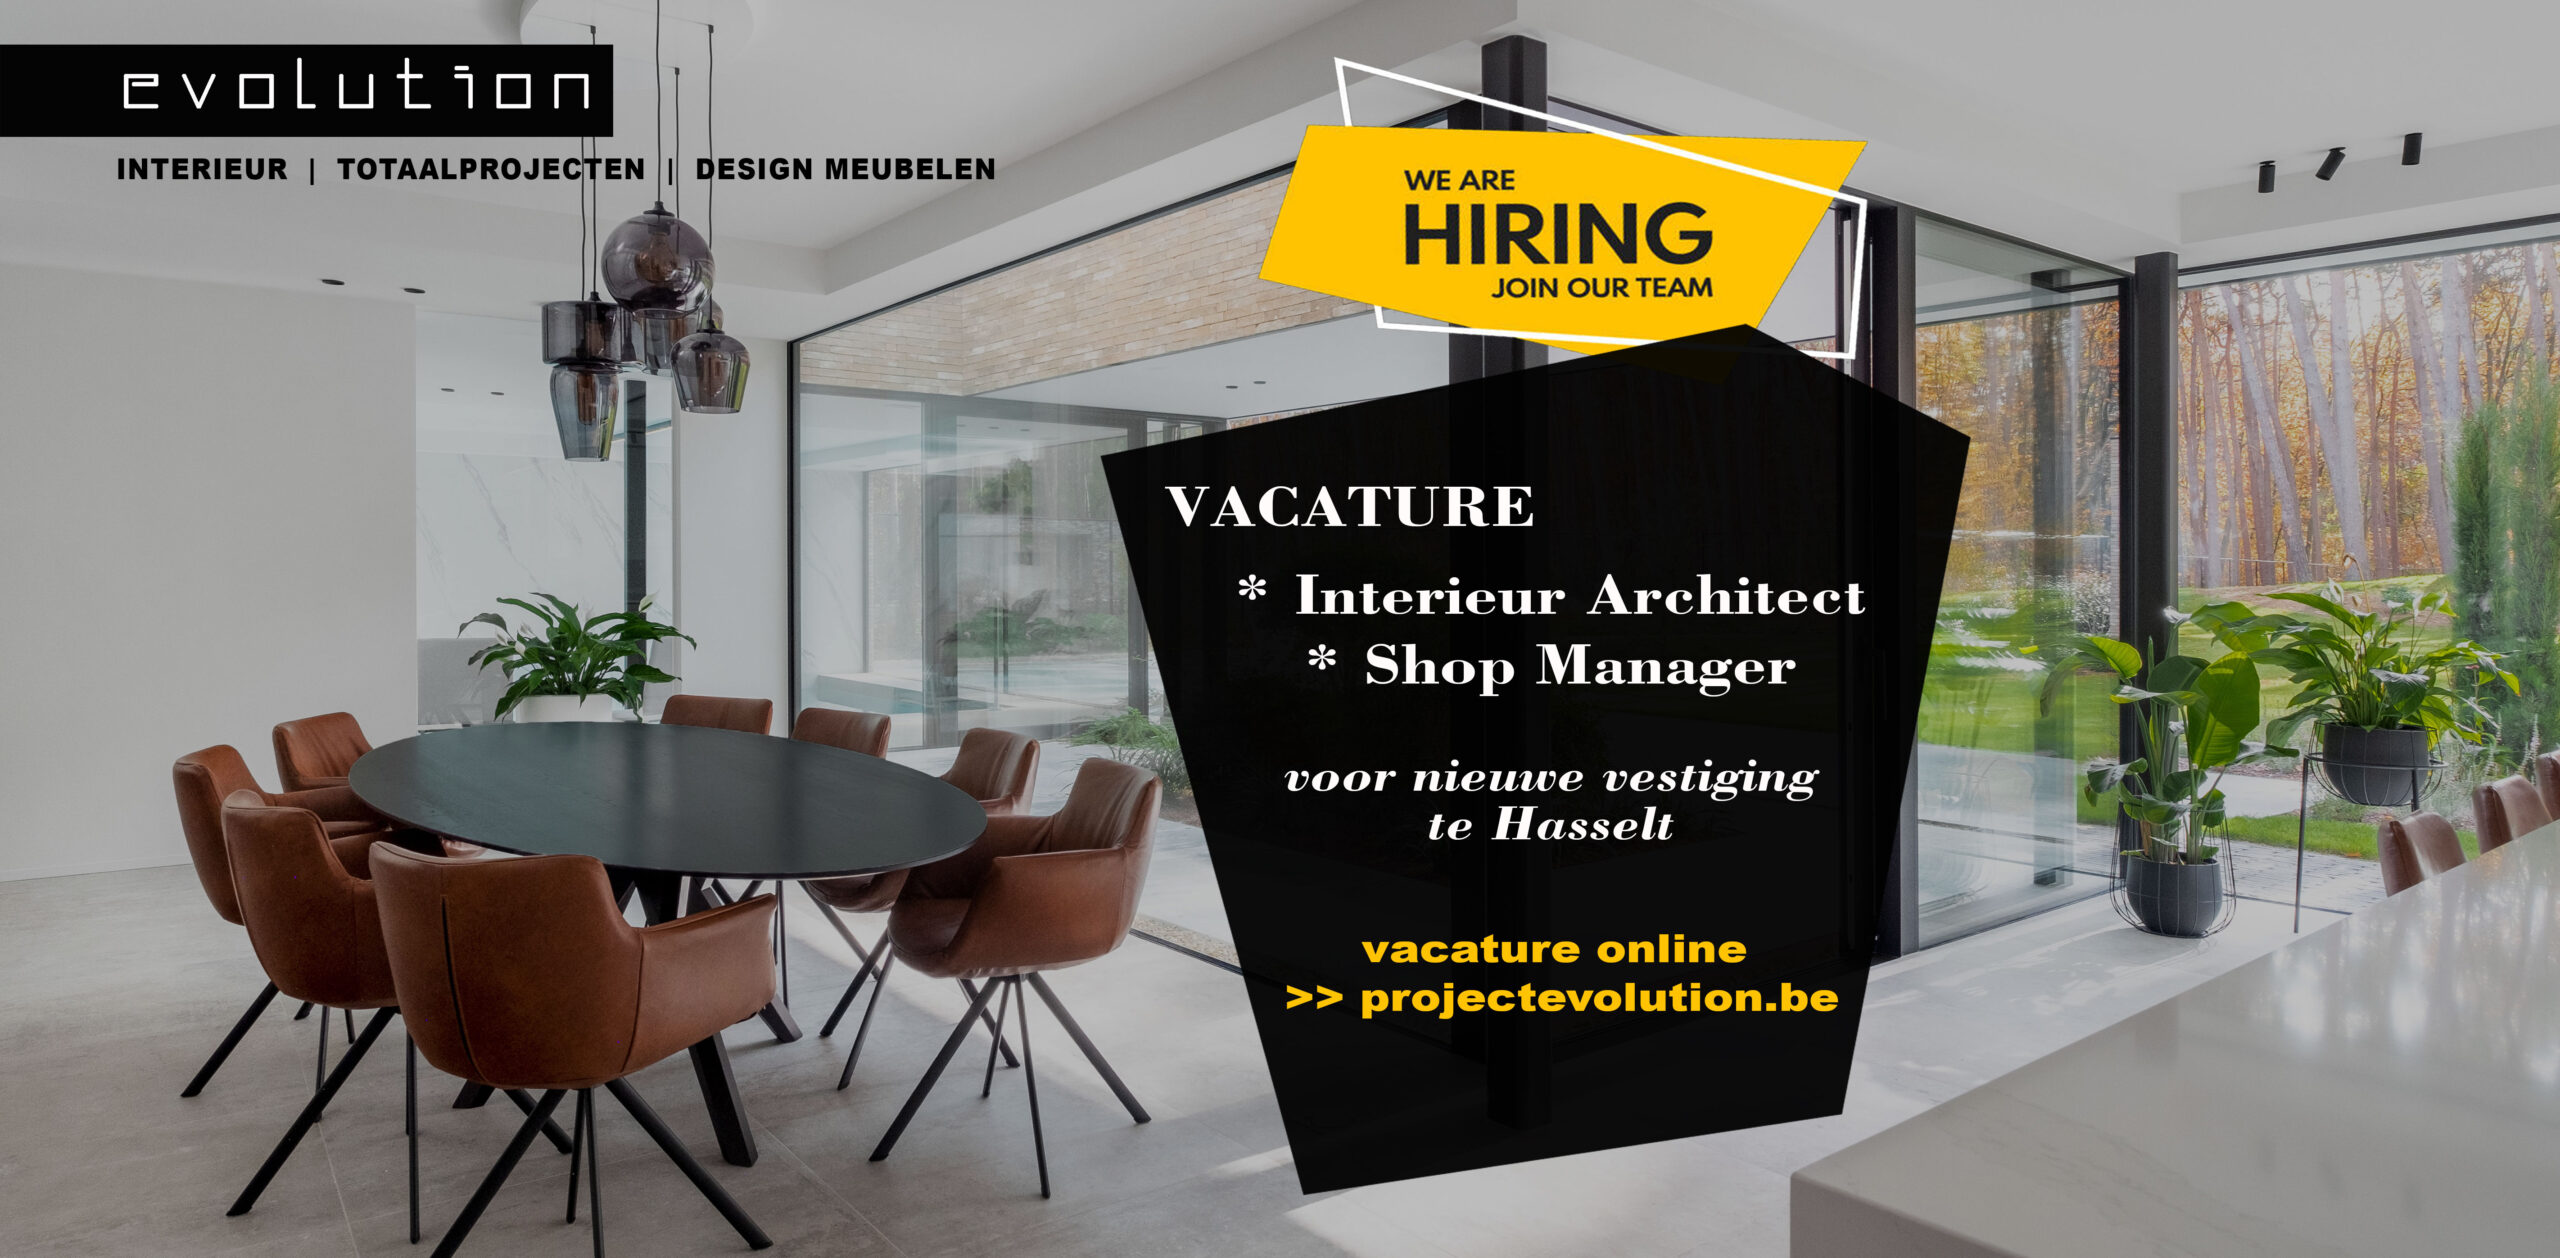 Project-Evolution-Vacature-Interieurarchitect-Tekenaar-Shop-Manager-Interieurs-Interieurarchitecten